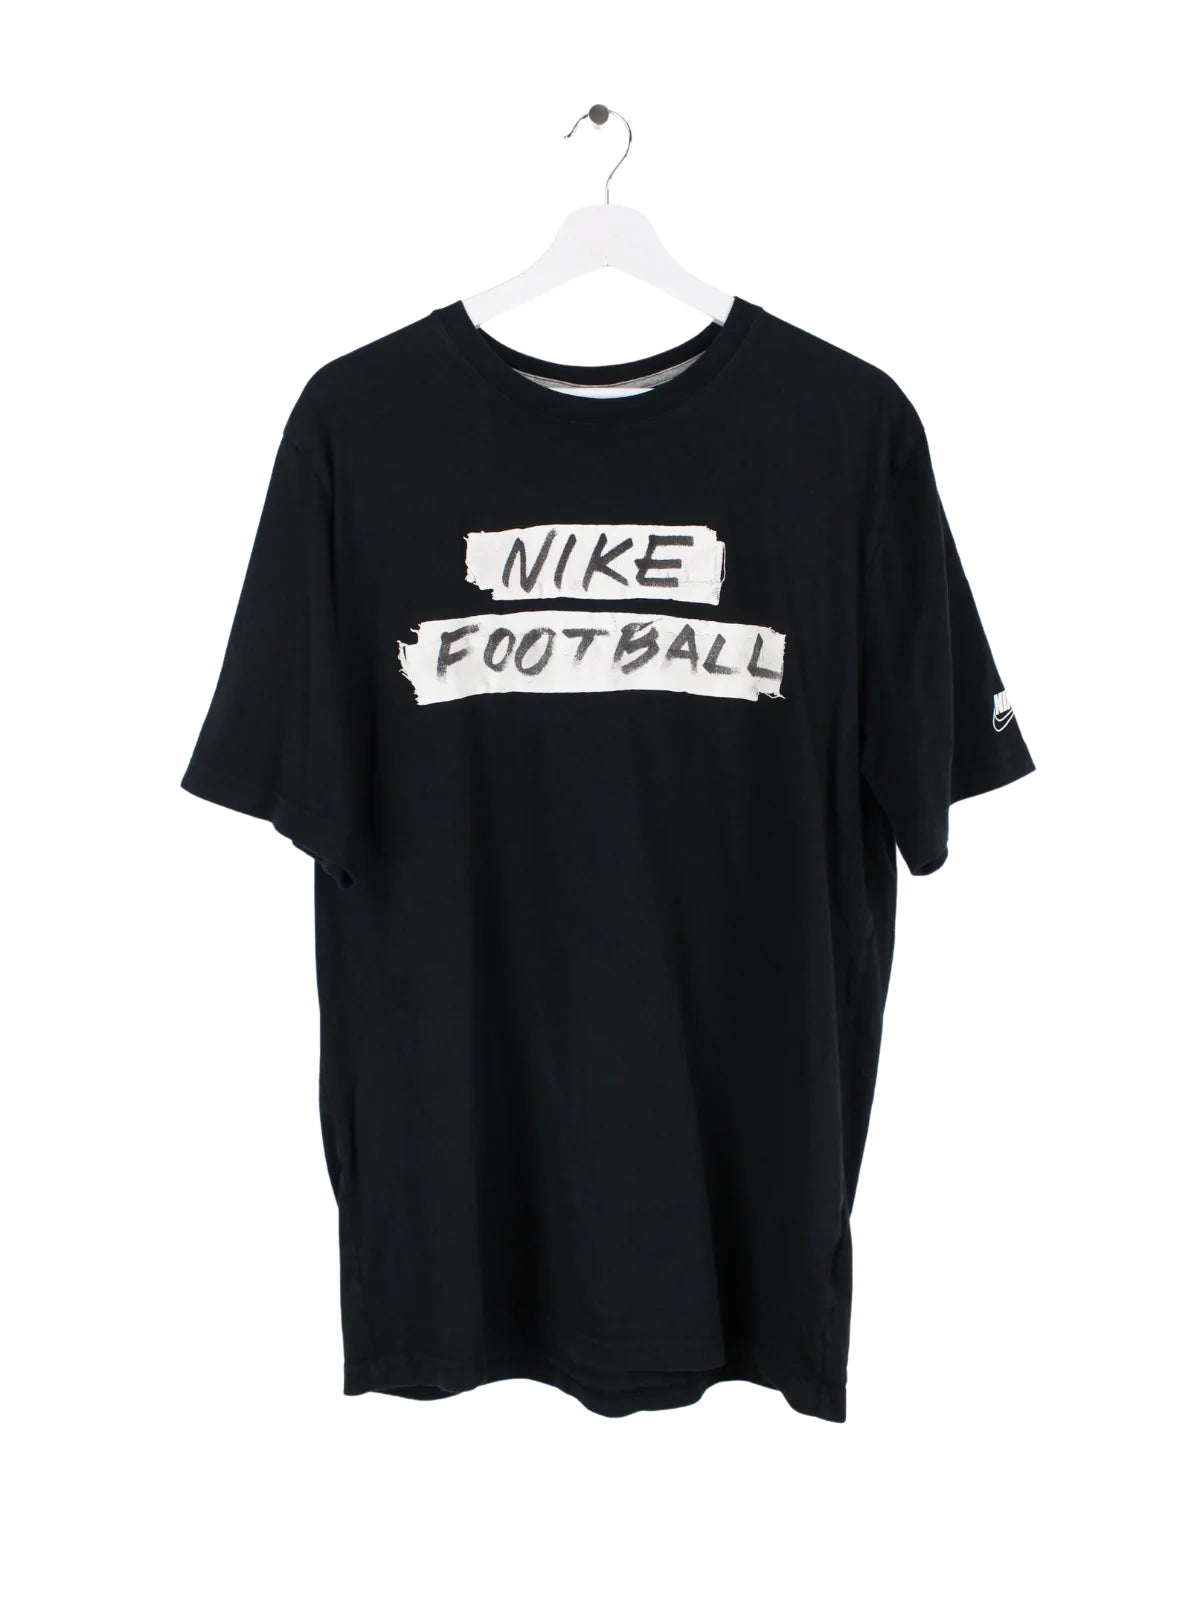 Nike Football T-Shirt Schwarz XL